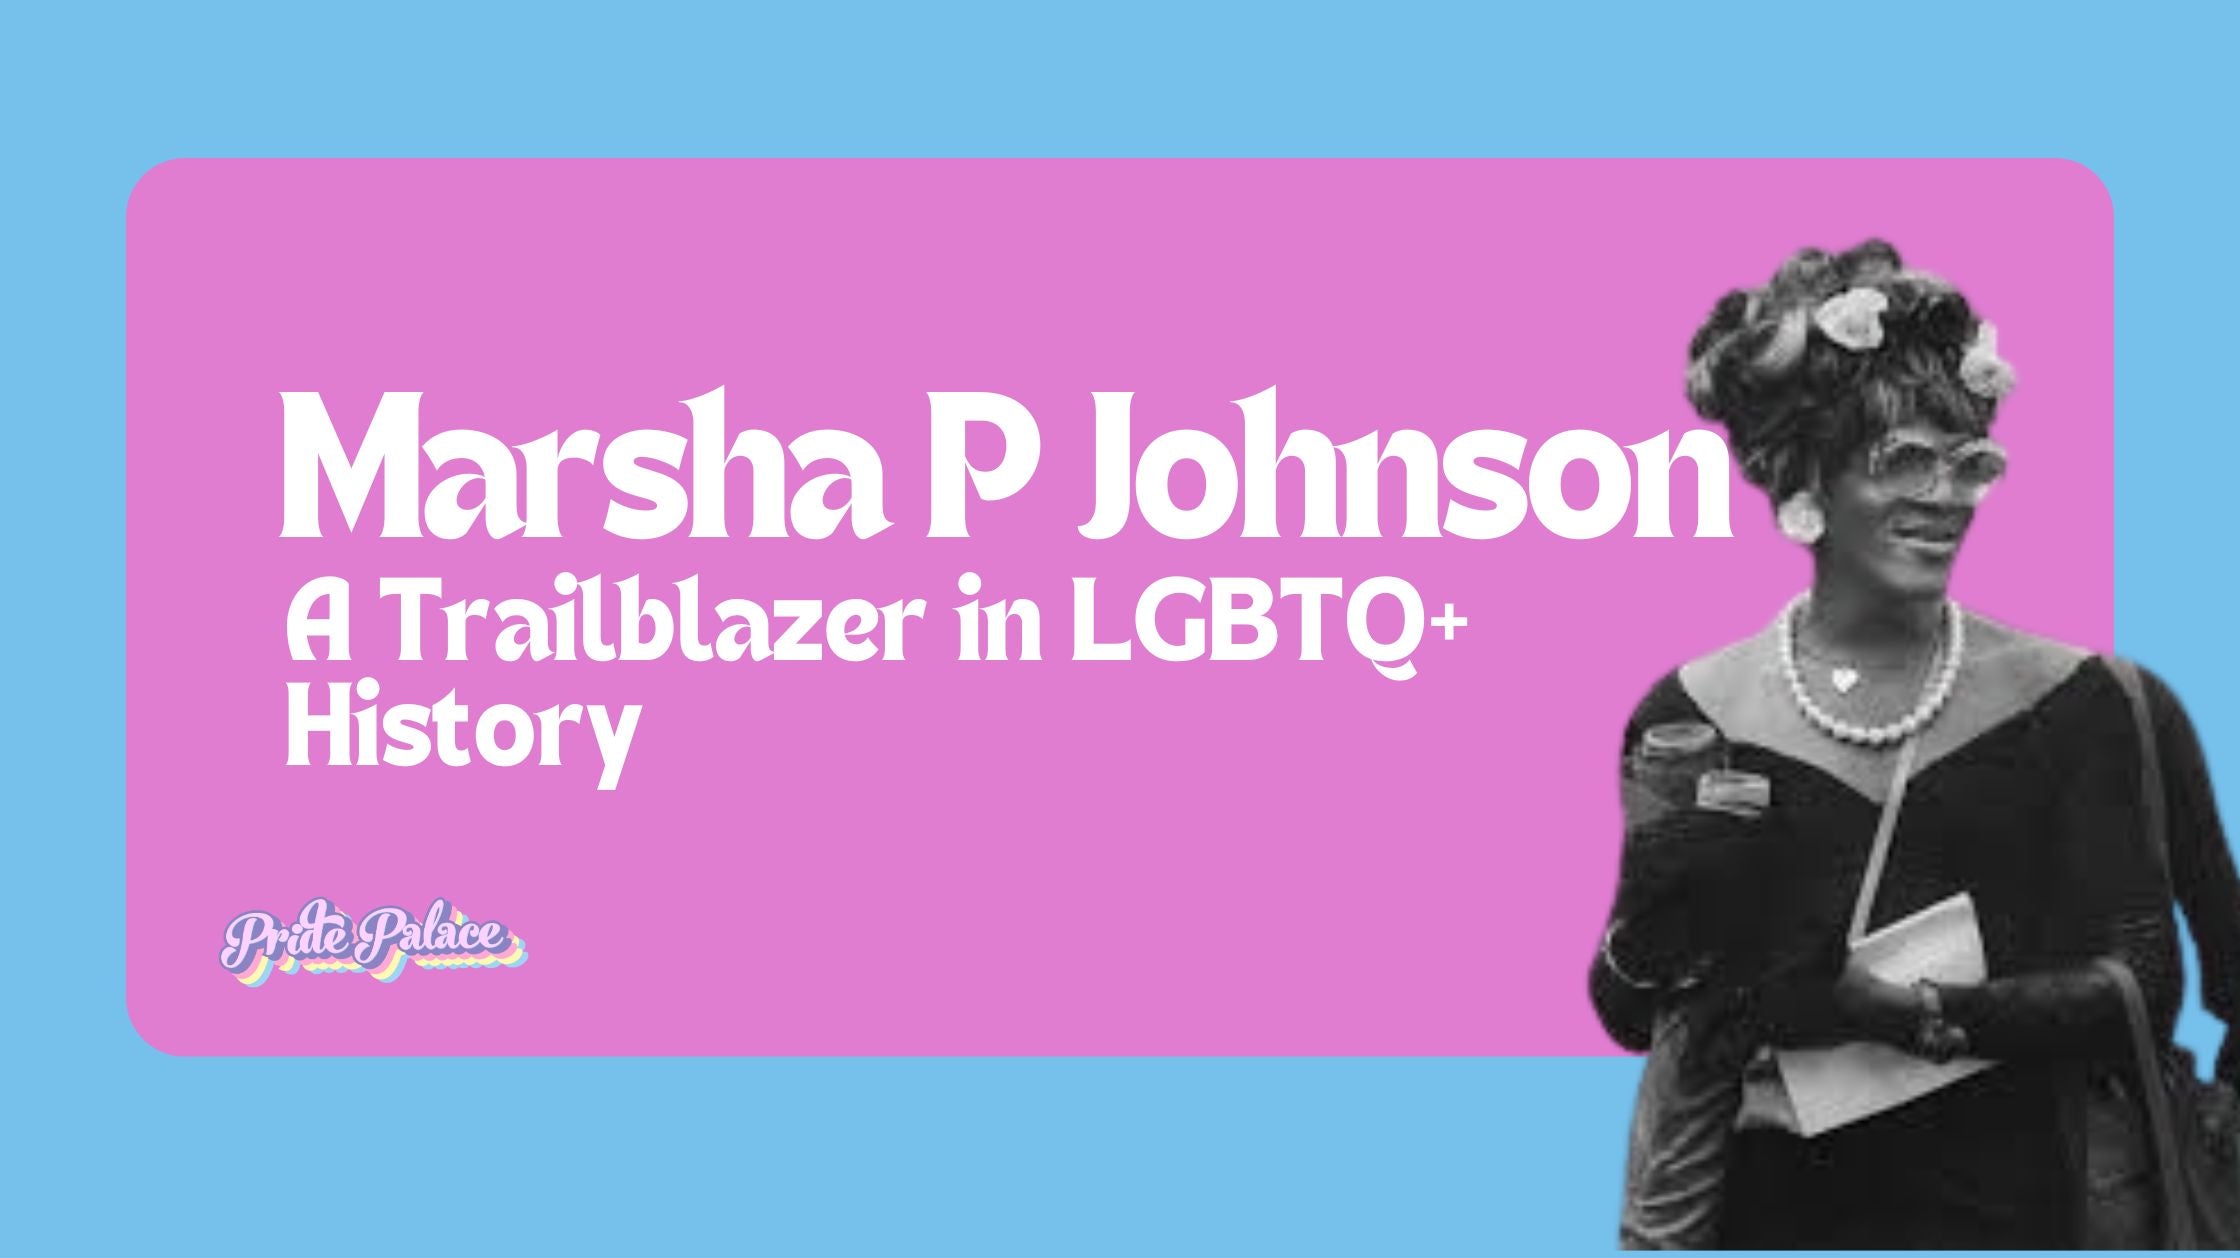 Celebrating Marsha P. Johnson: A Trailblazer in LGBTQ+ History